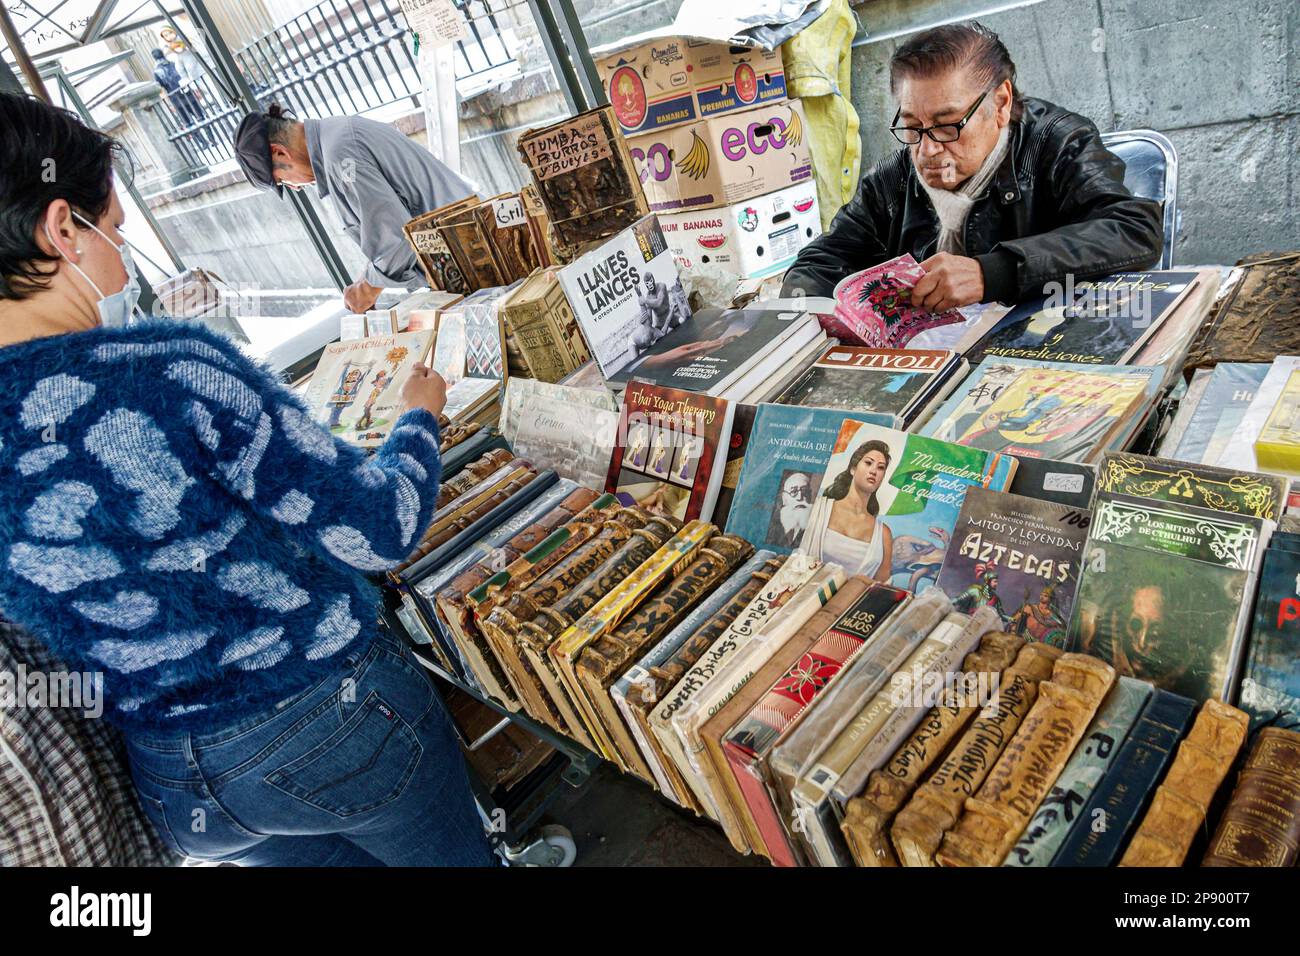 Mexiko-Stadt, Callejon Condesa Los Rescatadores, Bücher Buchhändler Buchverkäufer Kioske, lesen schauen, Männer Männer, Frauen Frauen Frauen Frauen, adu Stockfoto